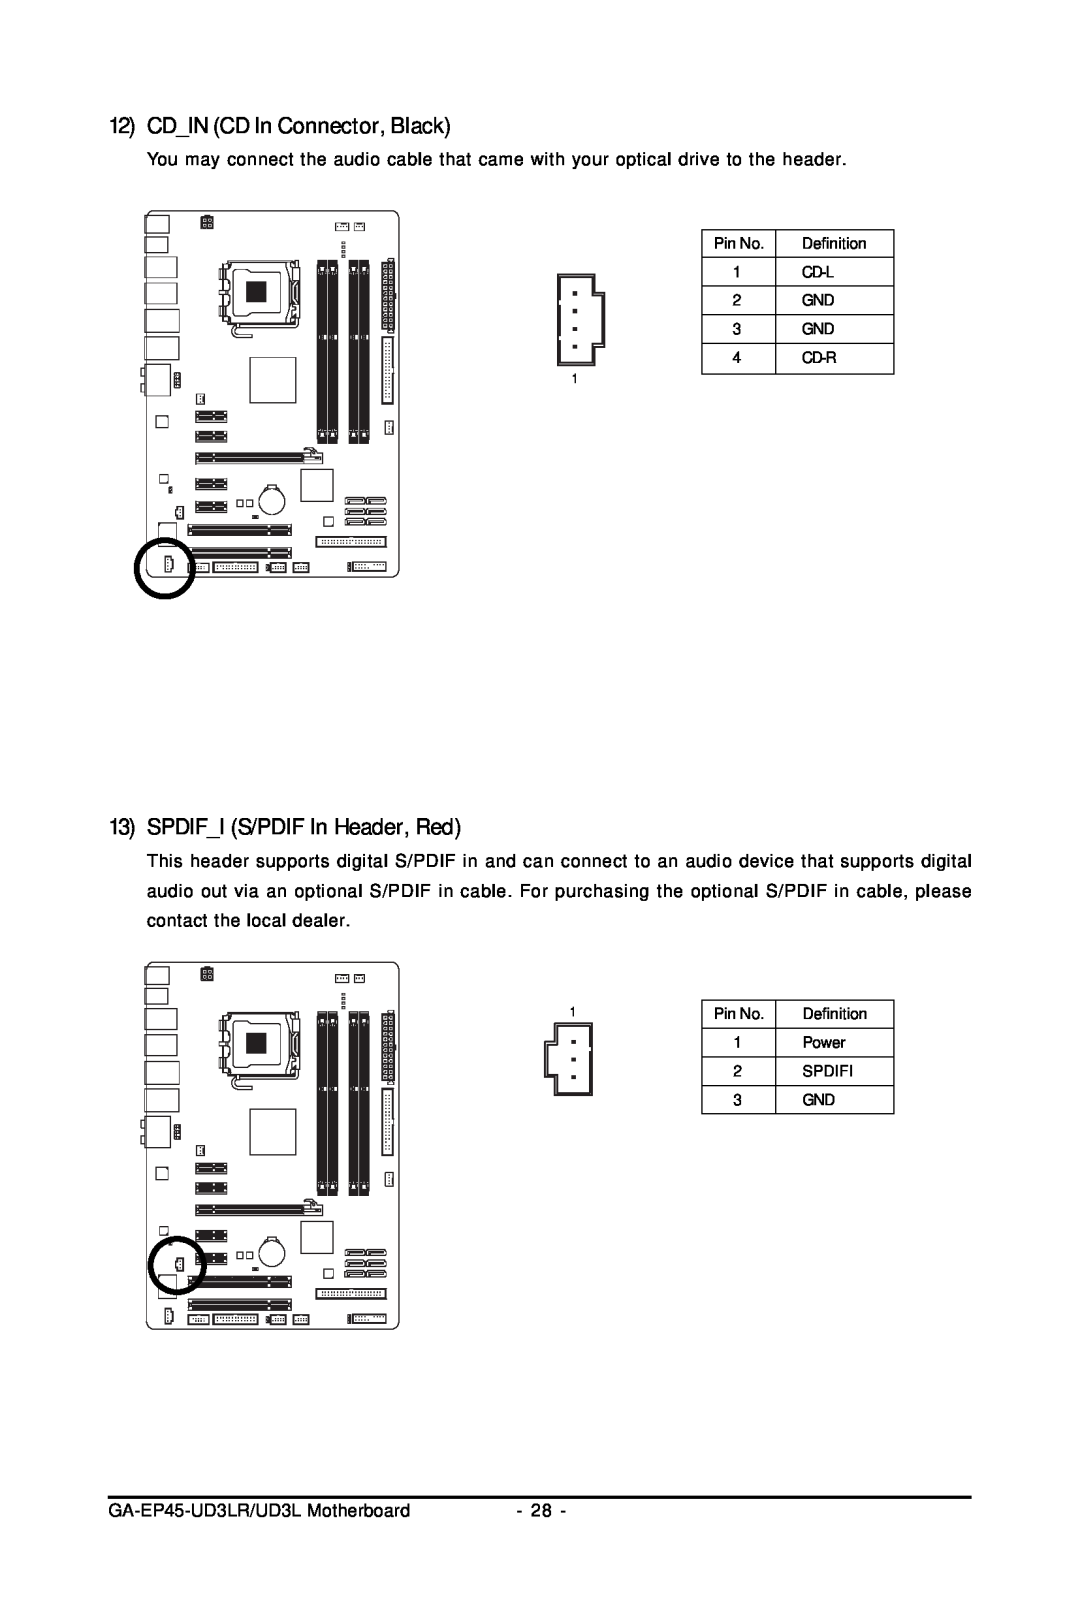 Gigabyte GA-EP45-UD3LR user manual CDIN CD In Connector, Black, SPDIFI S/PDIF In Header, Red 